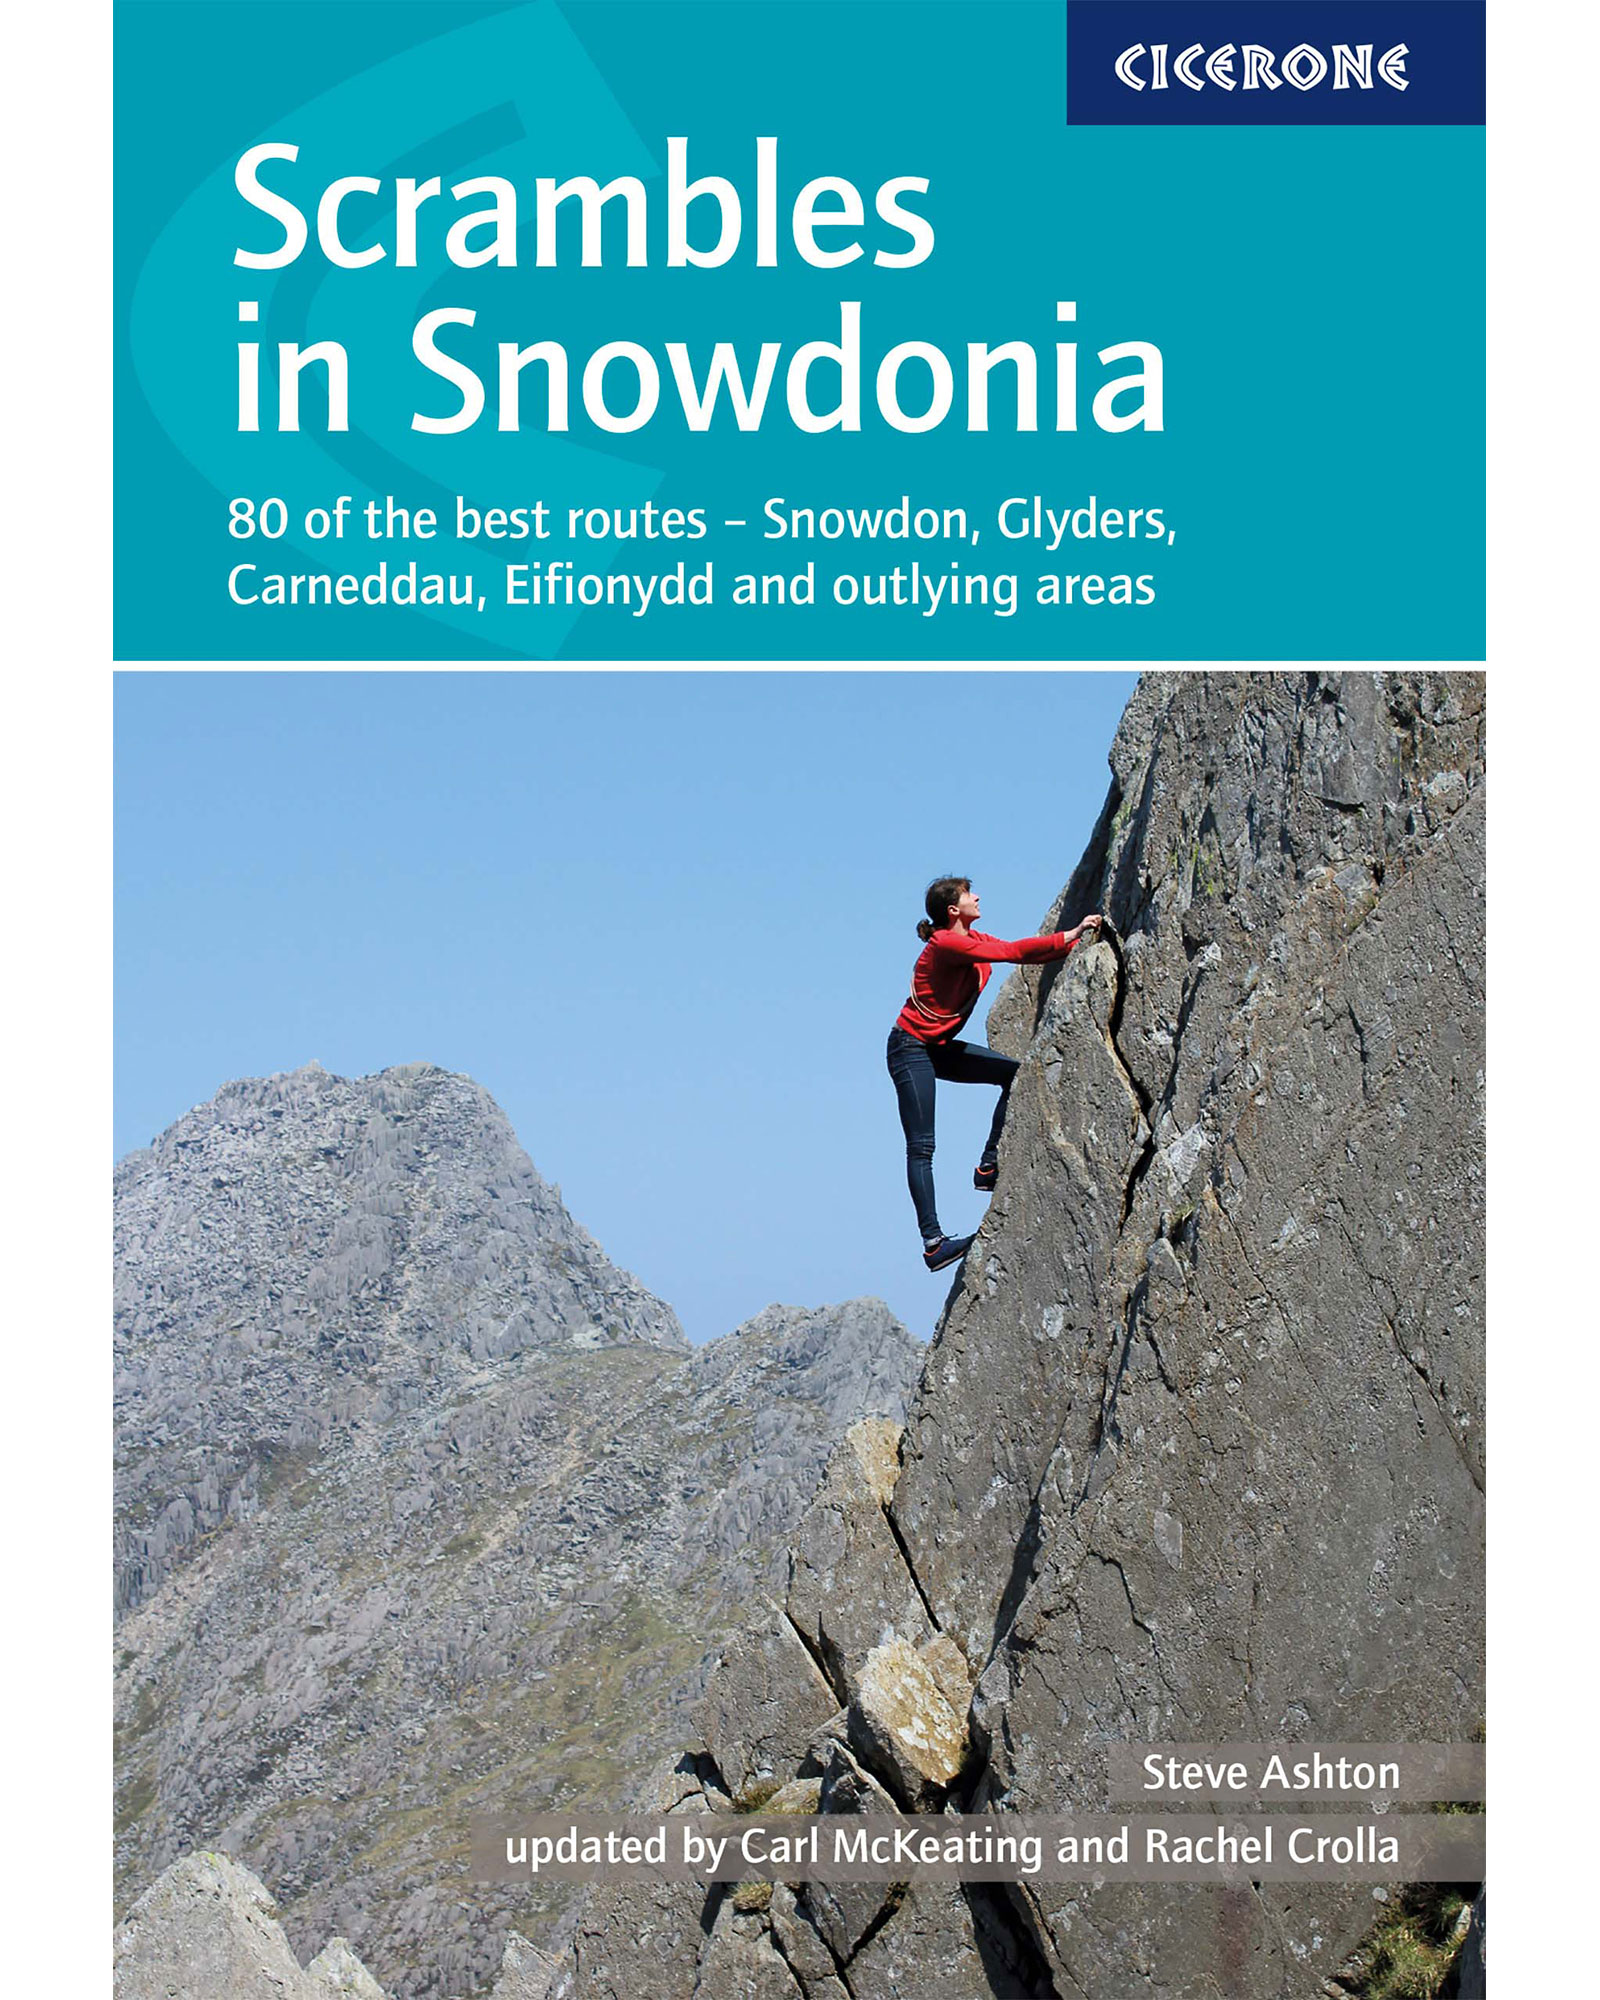 Cicerone Scrambles in Snowdonia Guide Book